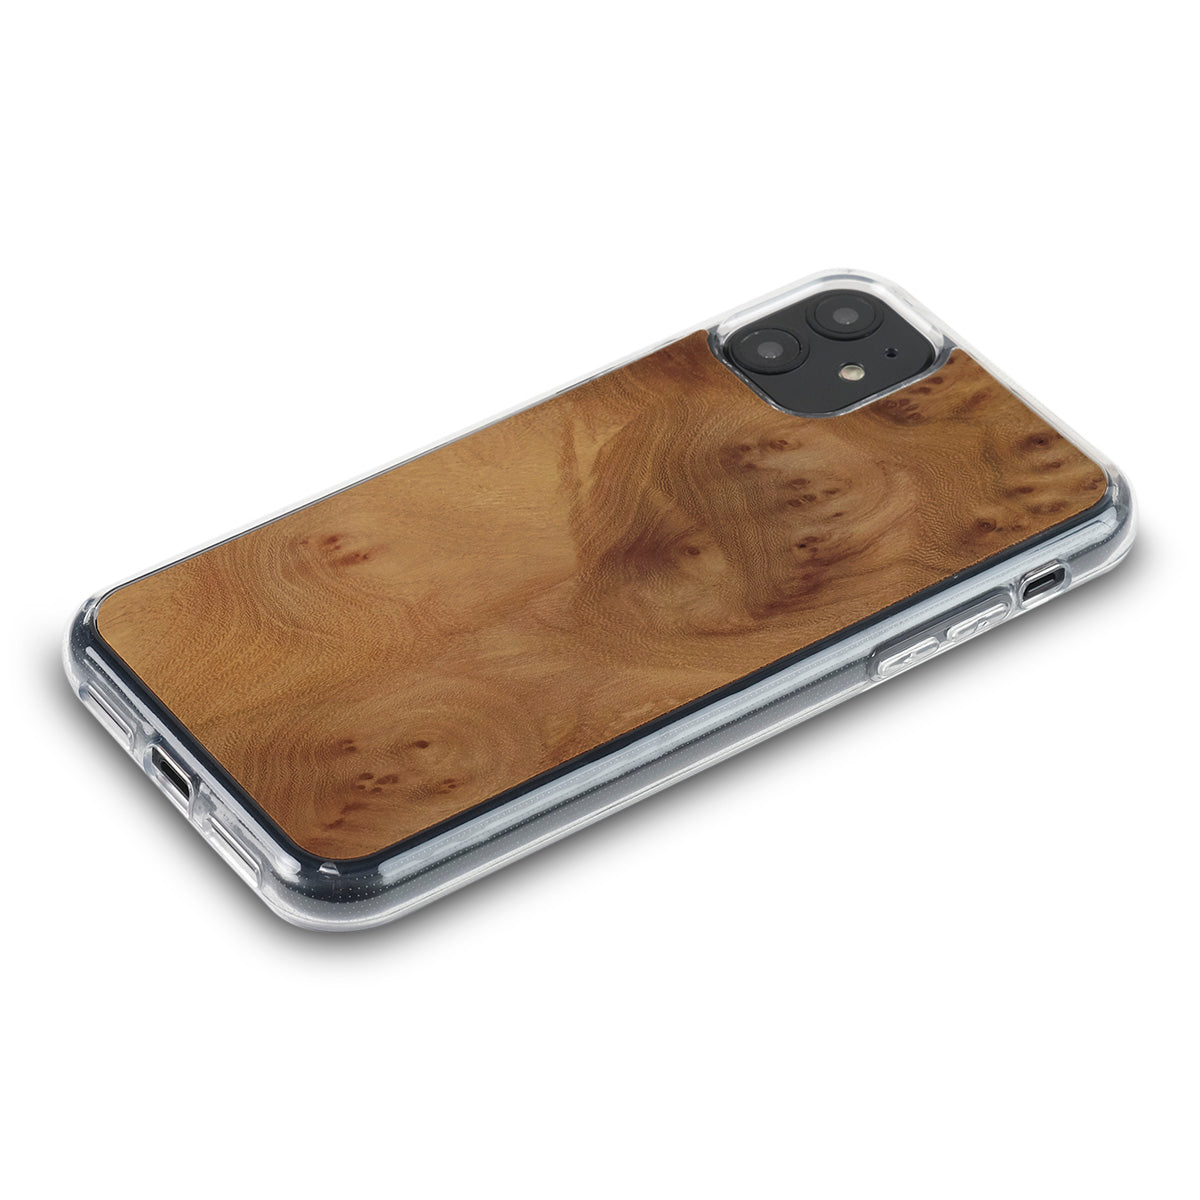 iPhone 11 —  #WoodBack Explorer Clear Case